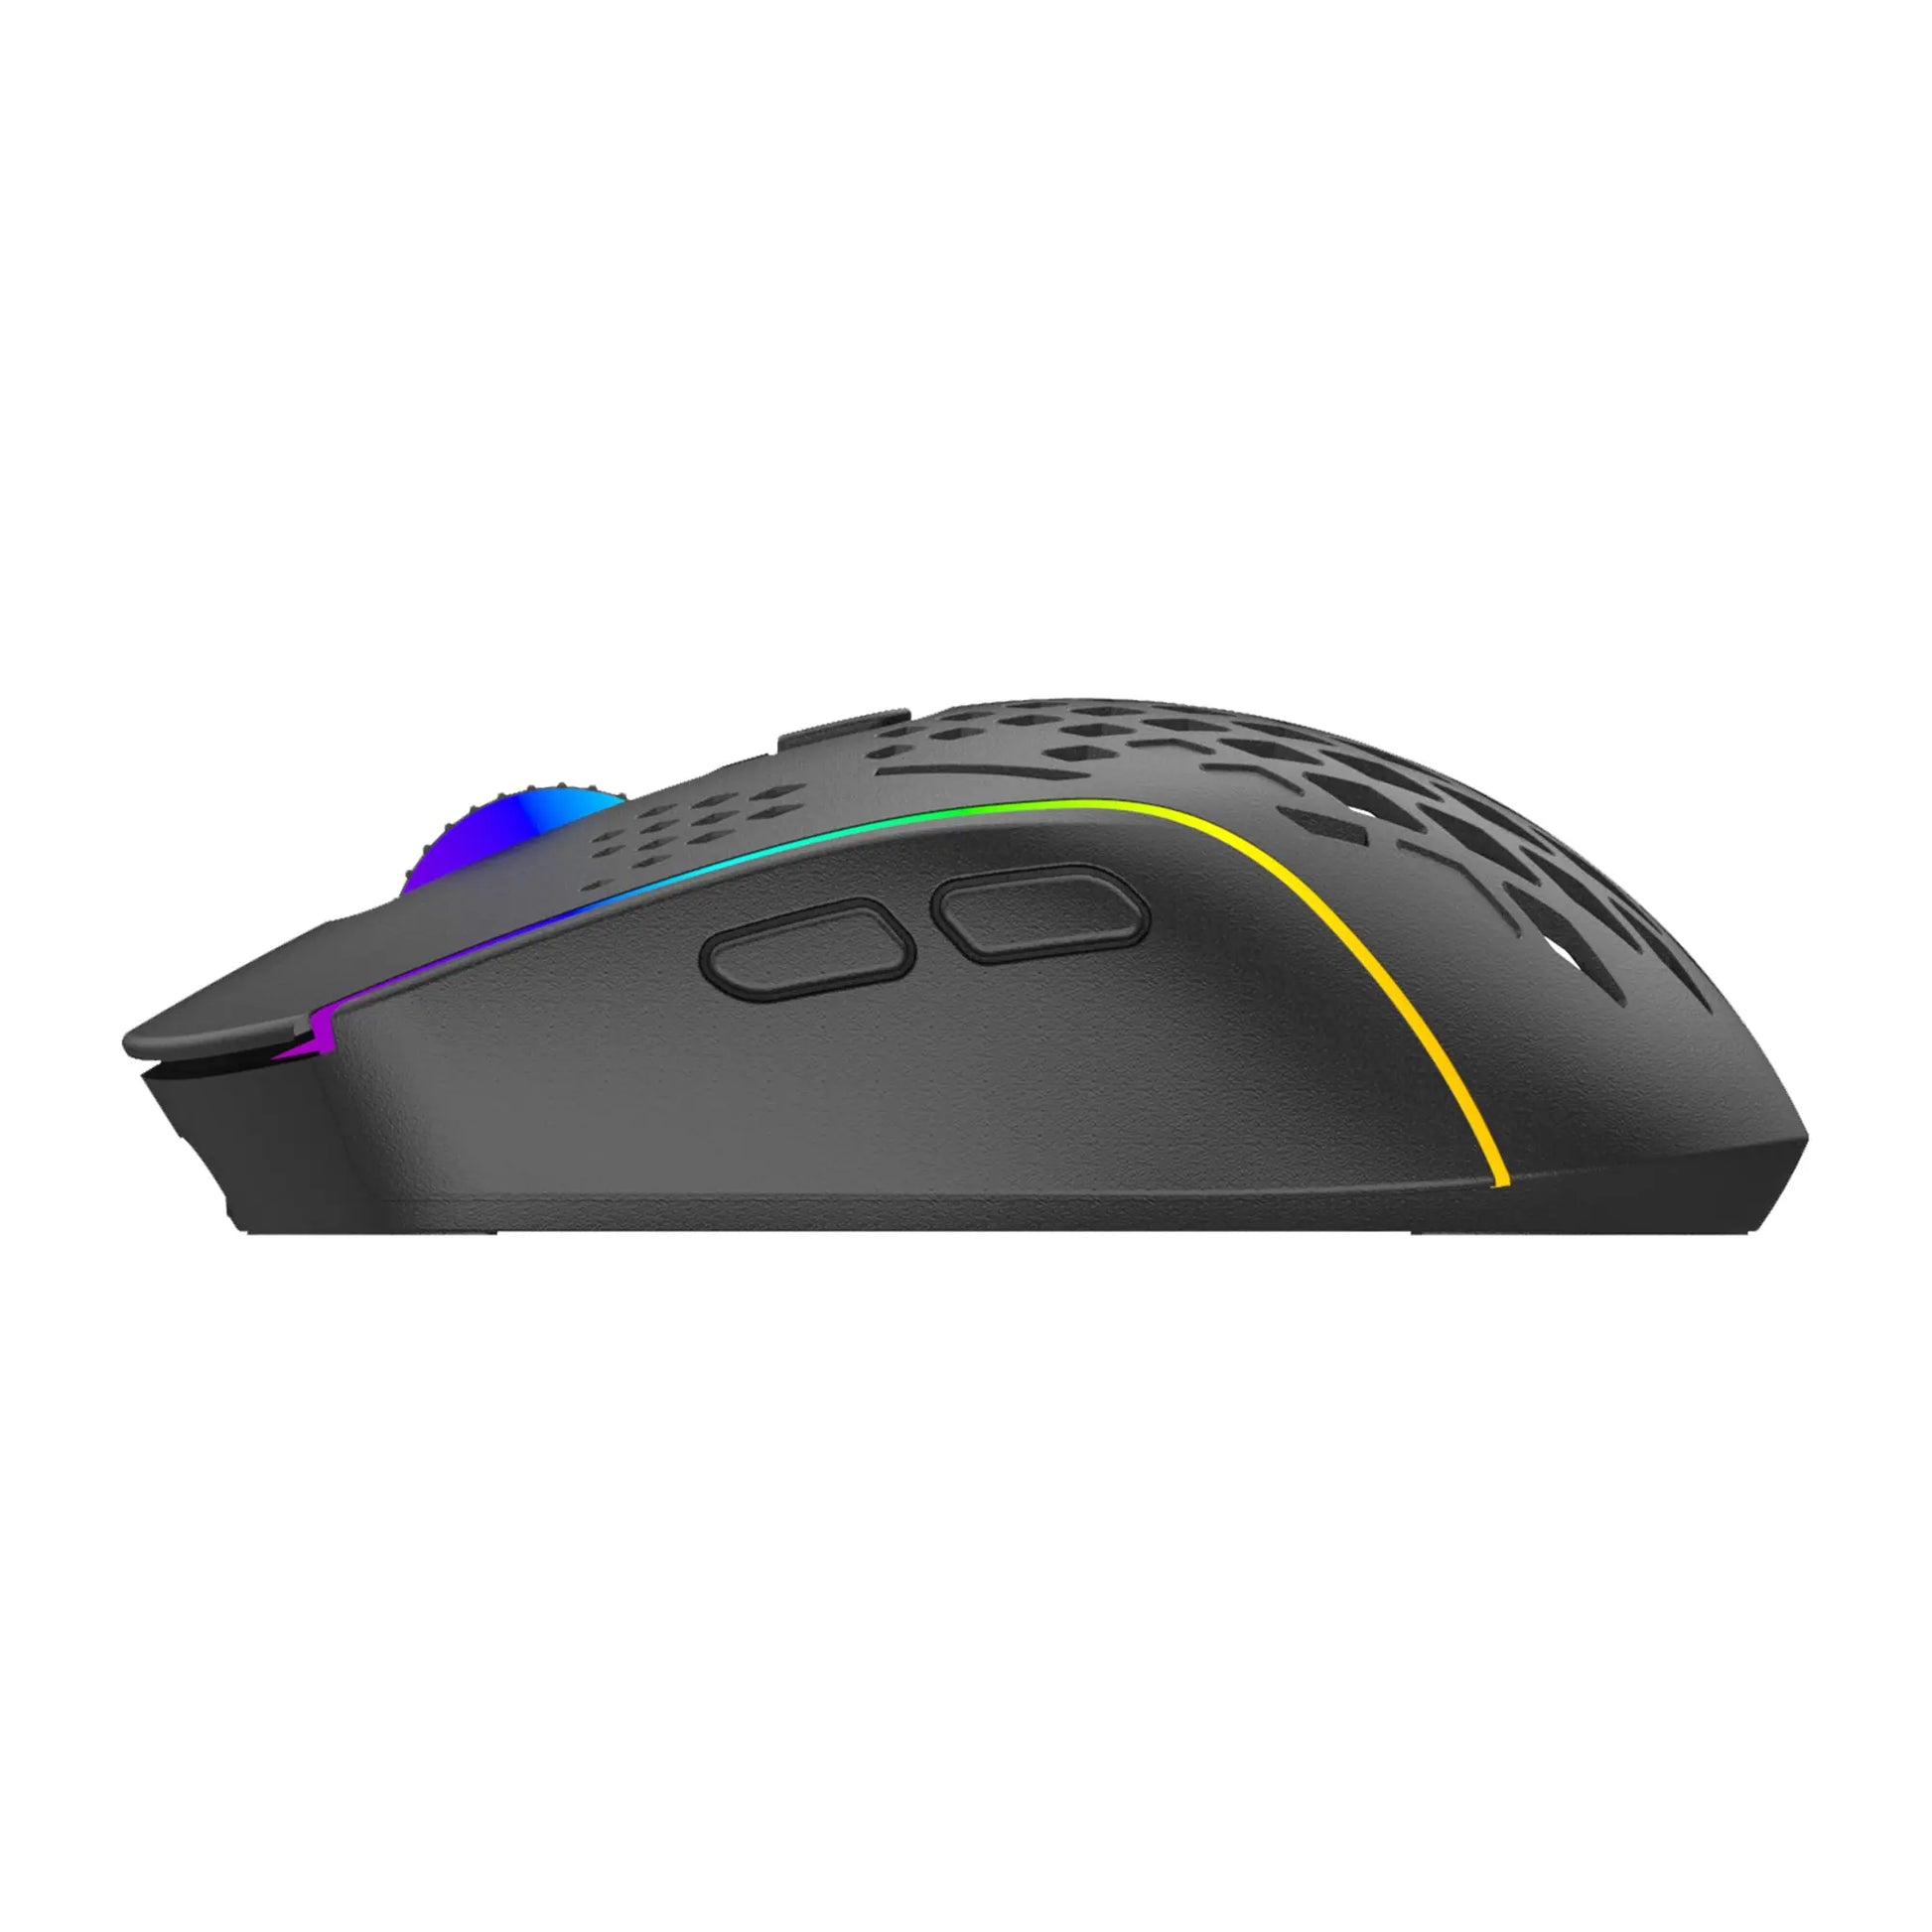 Ant Esports GM700 RGB Wireless Gaming Mouse - Black 4800 DPI